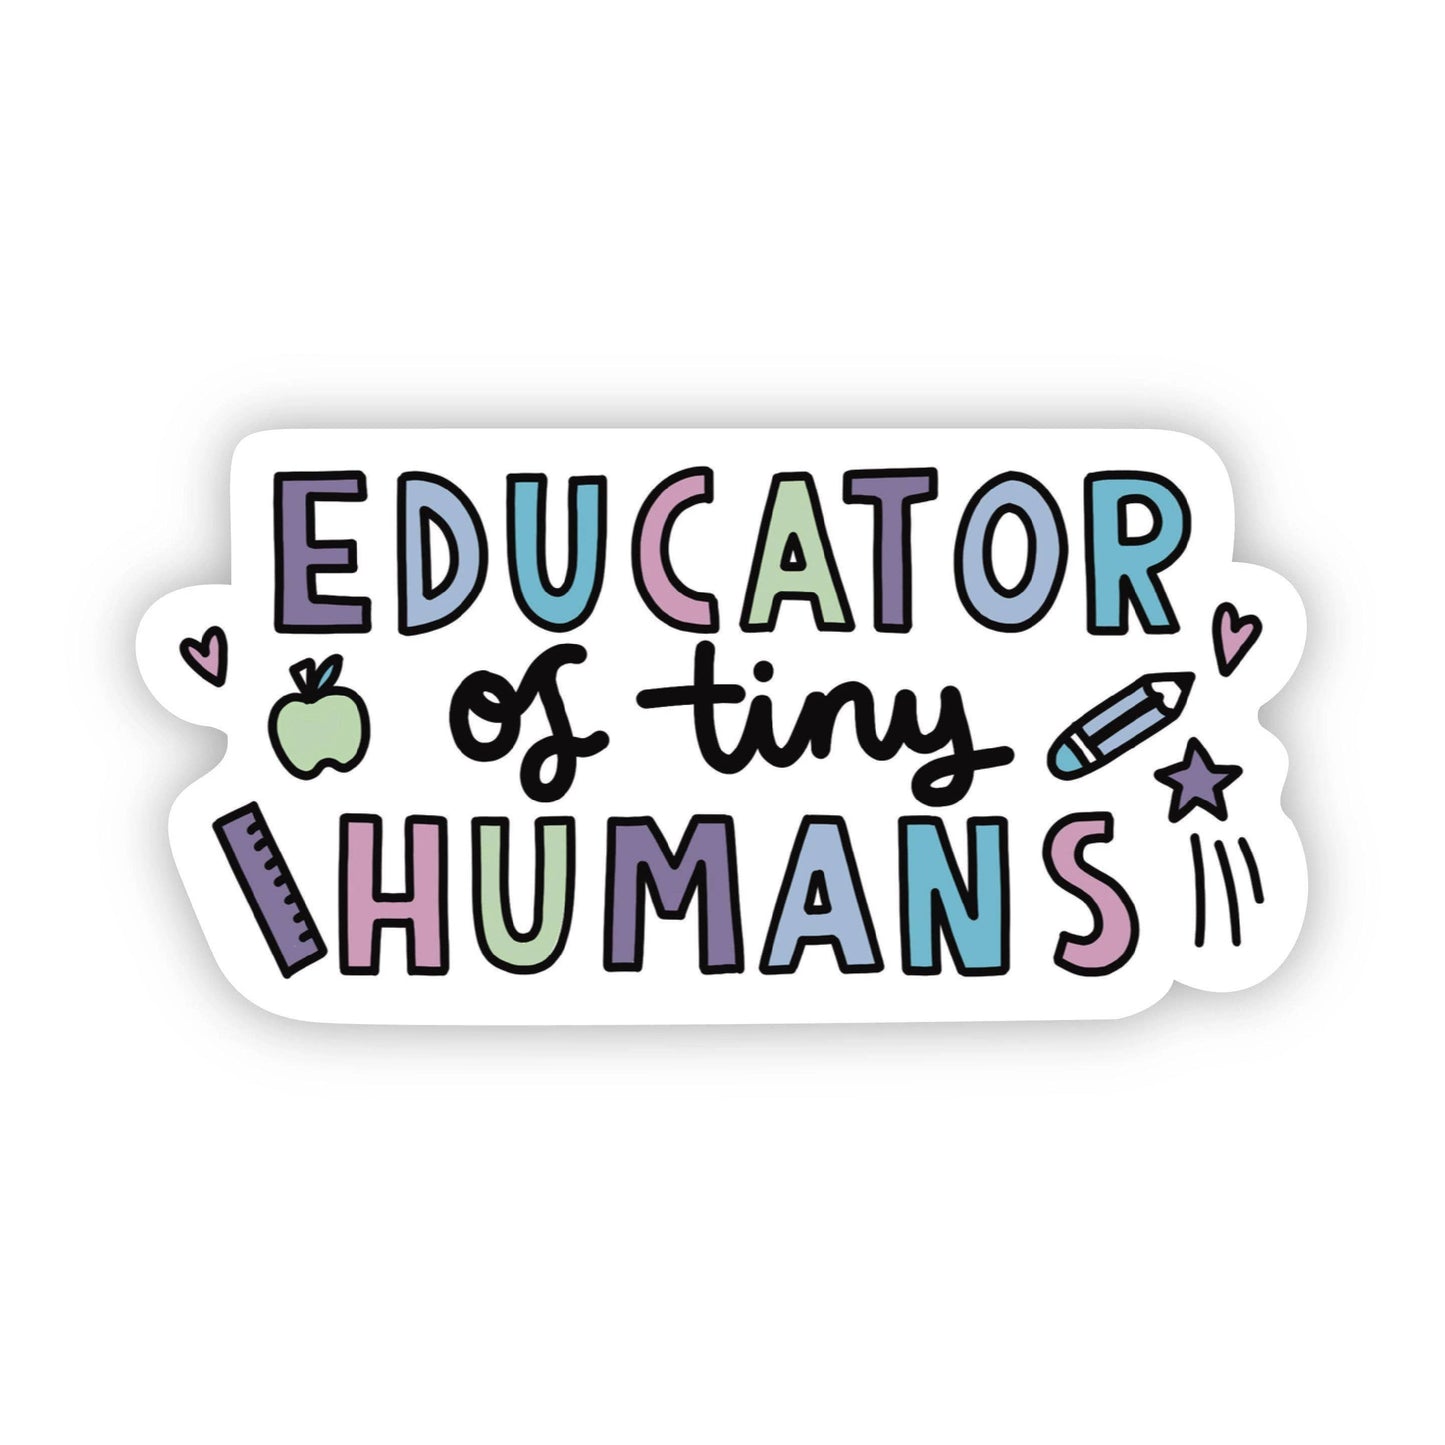 Educator of Tiny Humans - Sticker